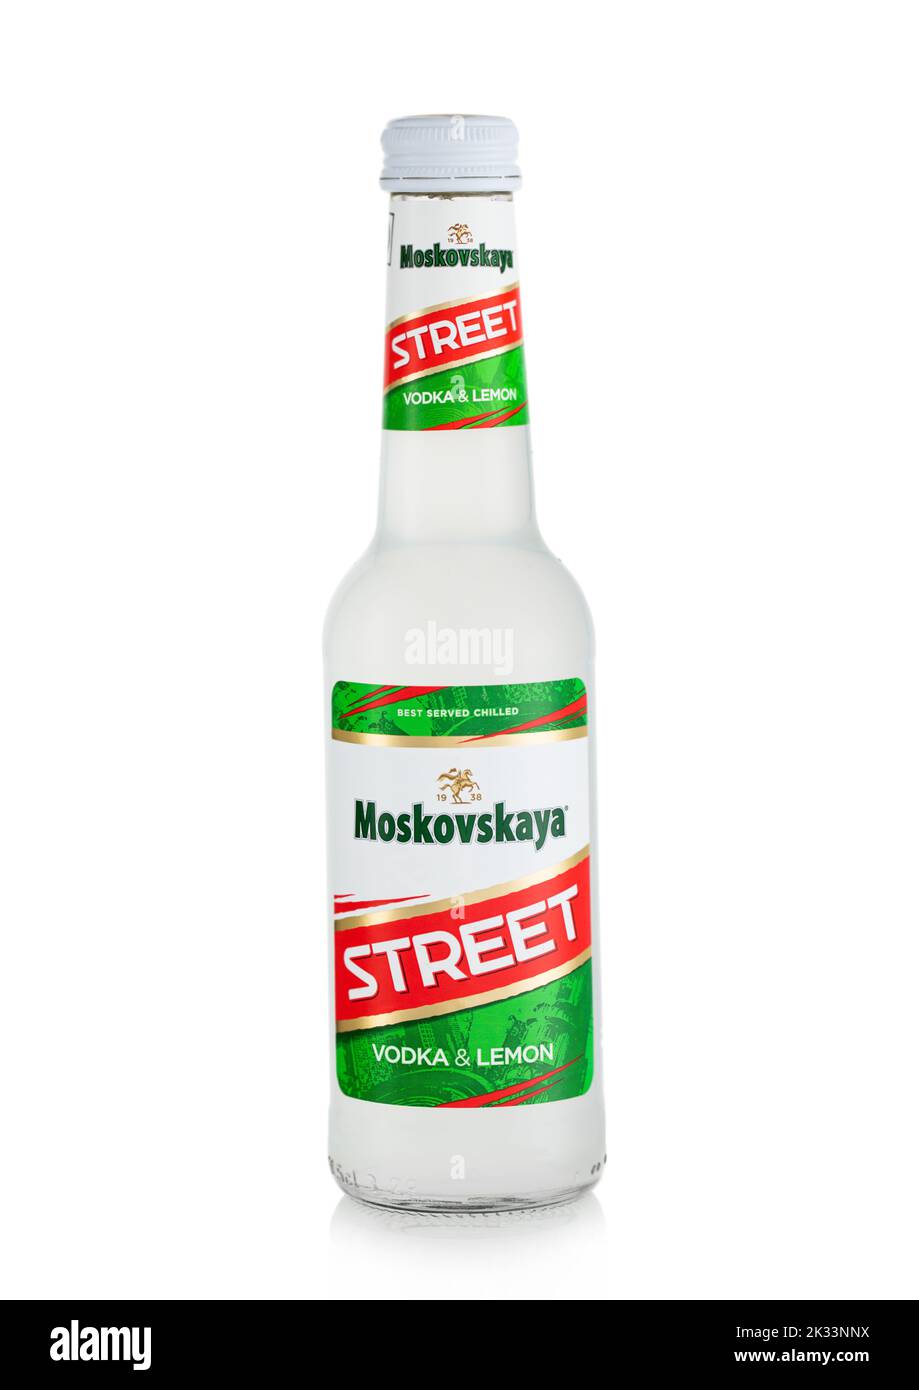 LONDON,UK - MAY 12, 2022: Bottle of Moskovskaya street vodka and lemon mixed drink on white. Stock Photo